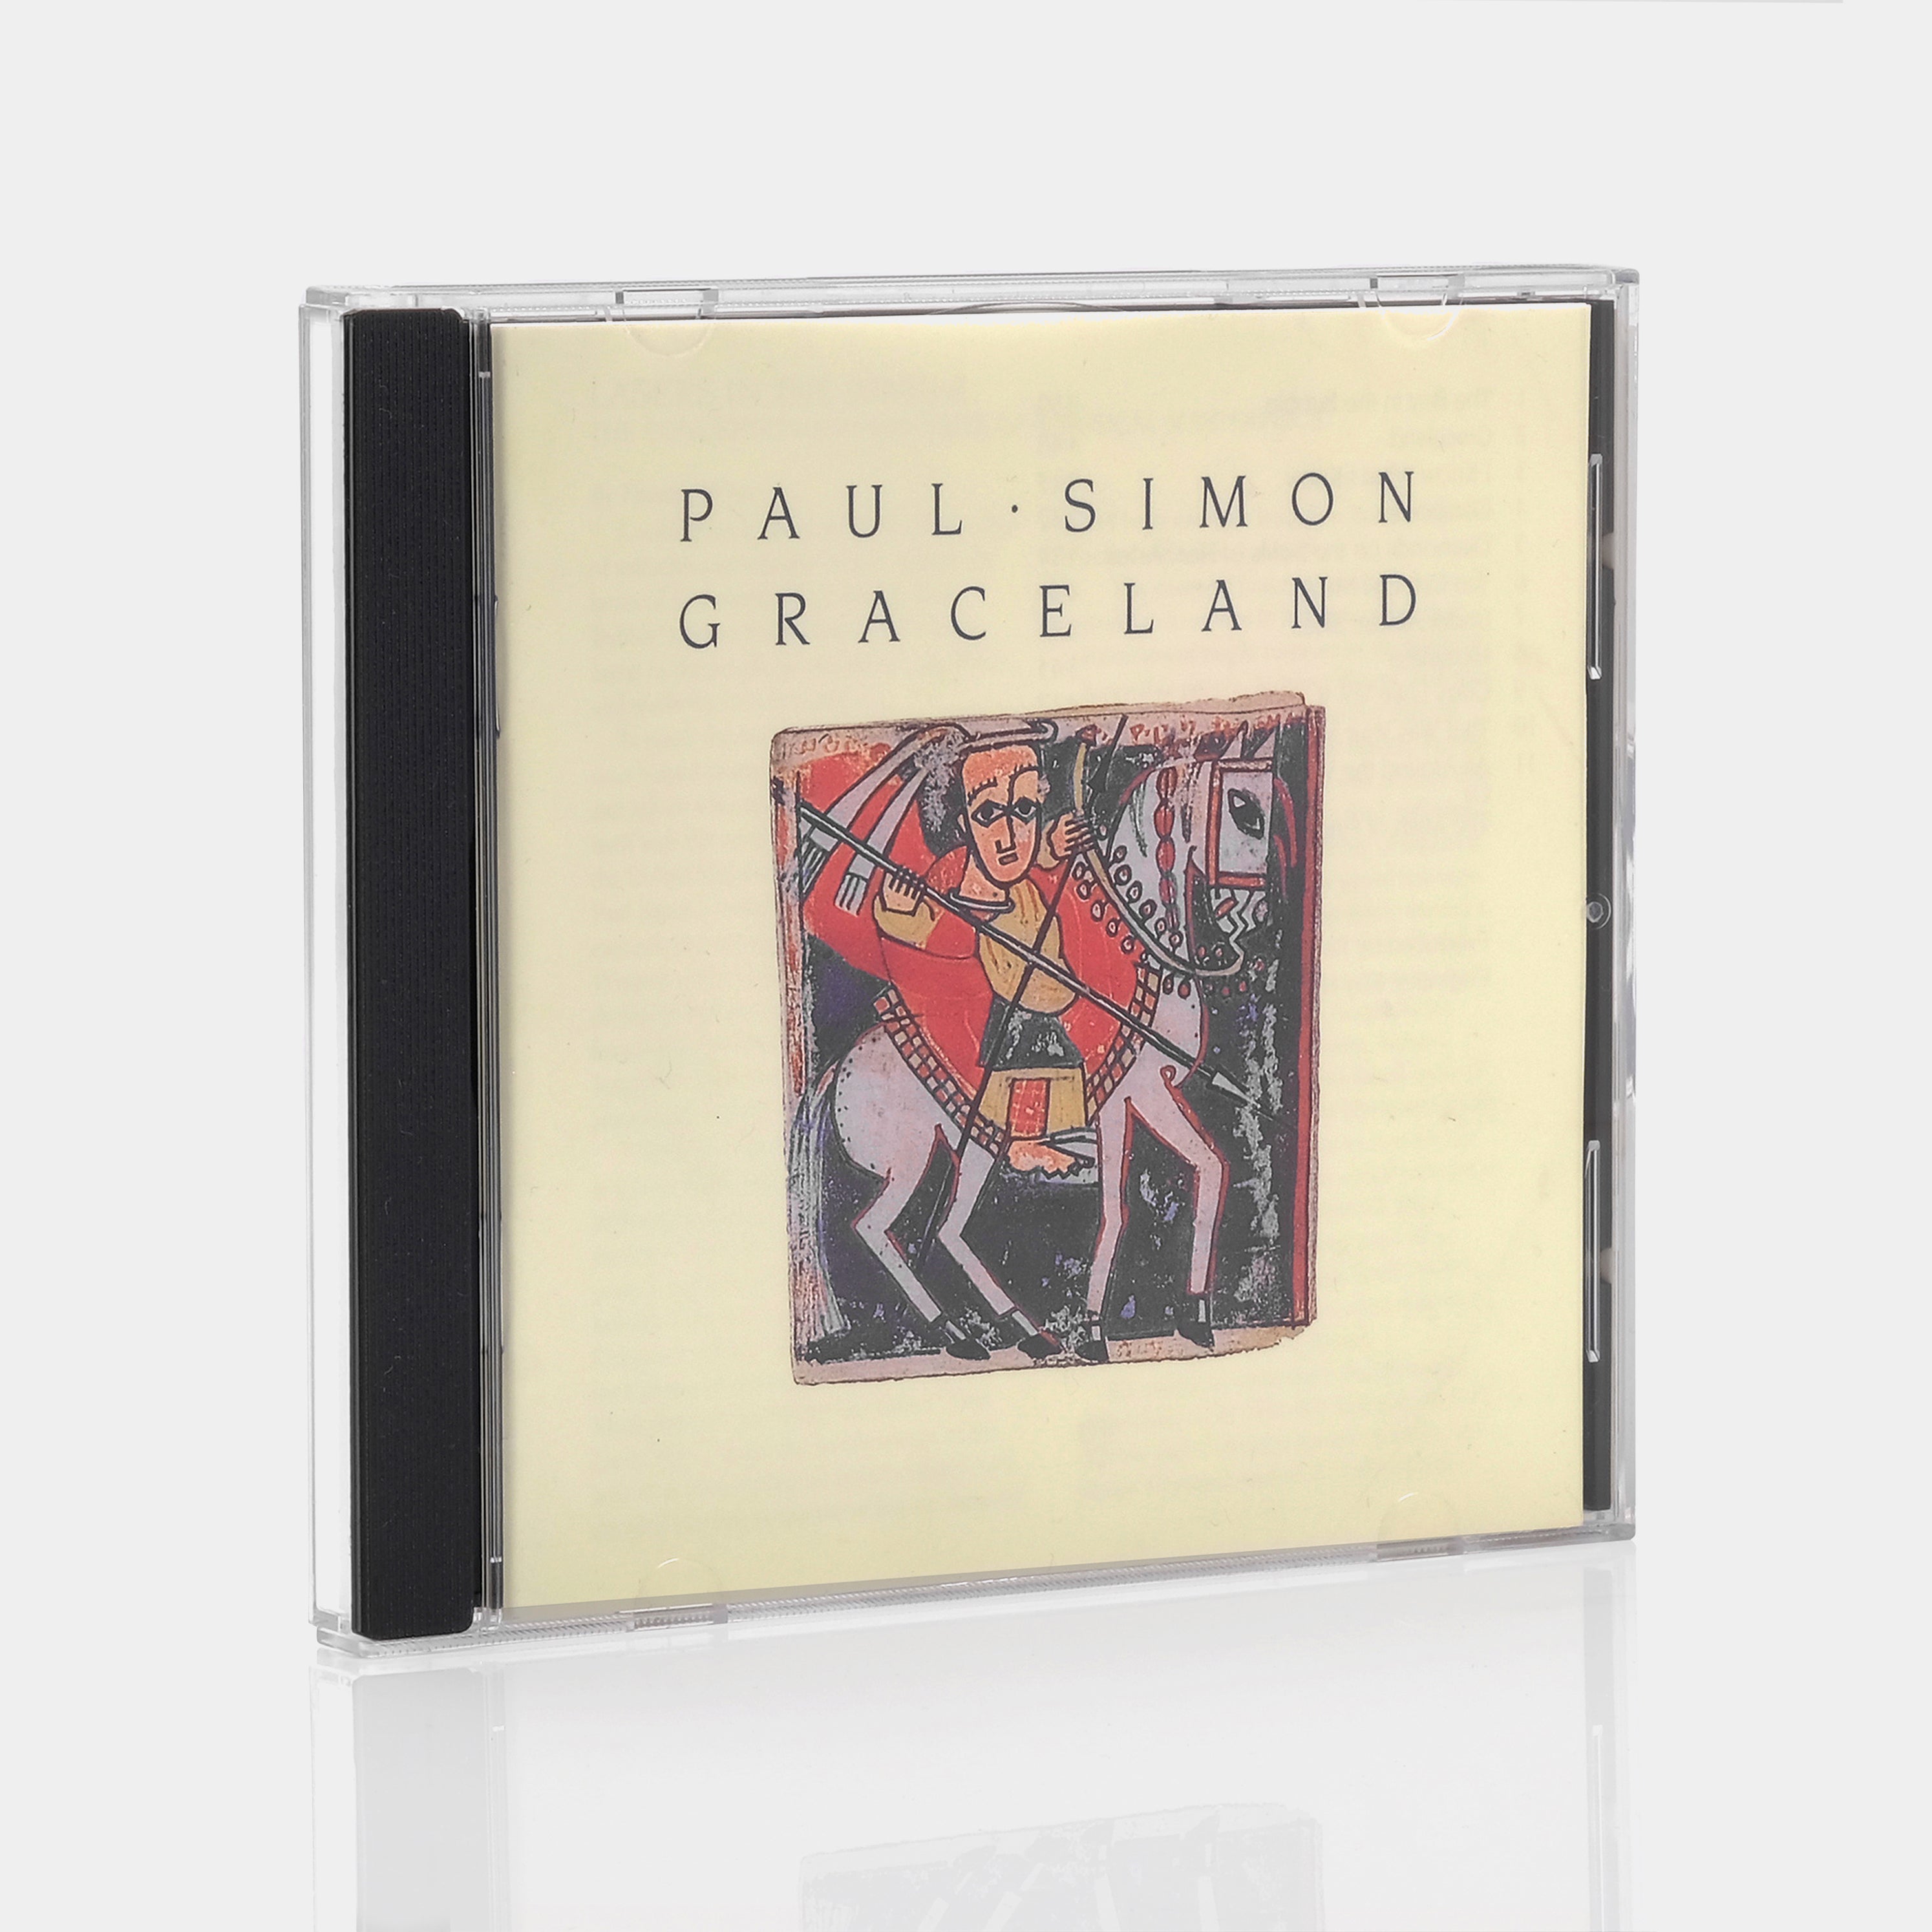 Paul Simon - Graceland CD